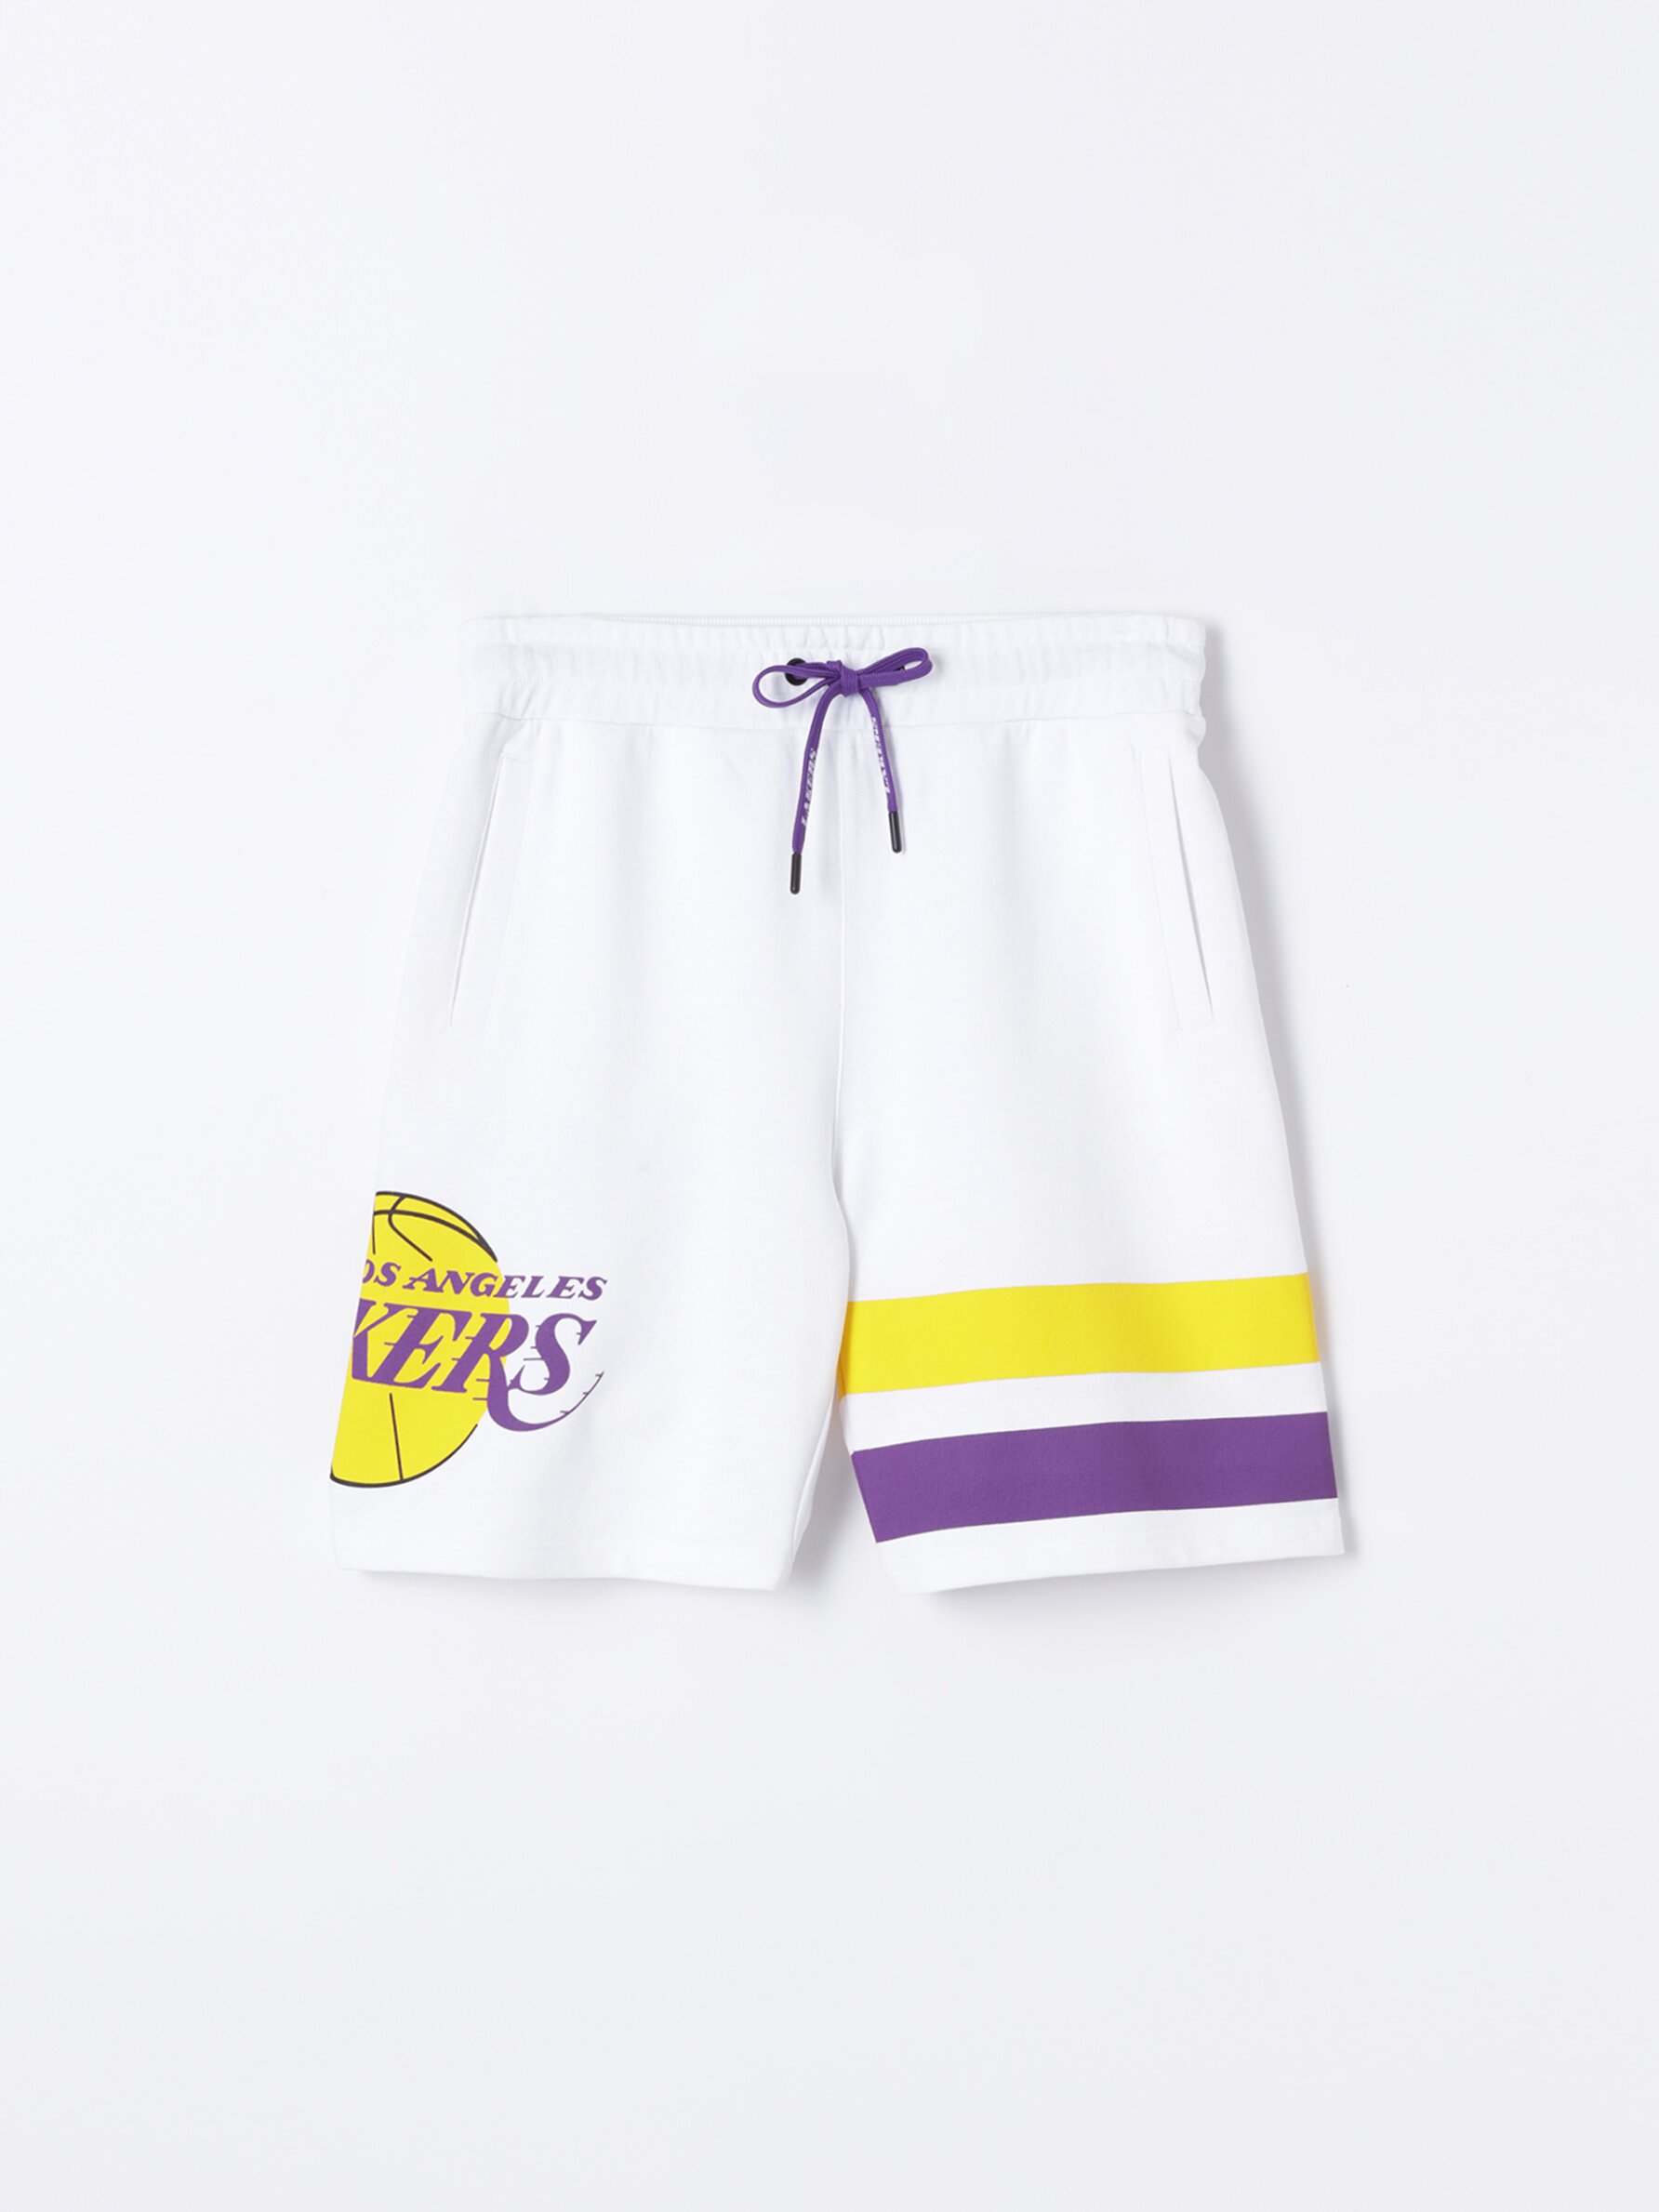 Lakers Boxer Short